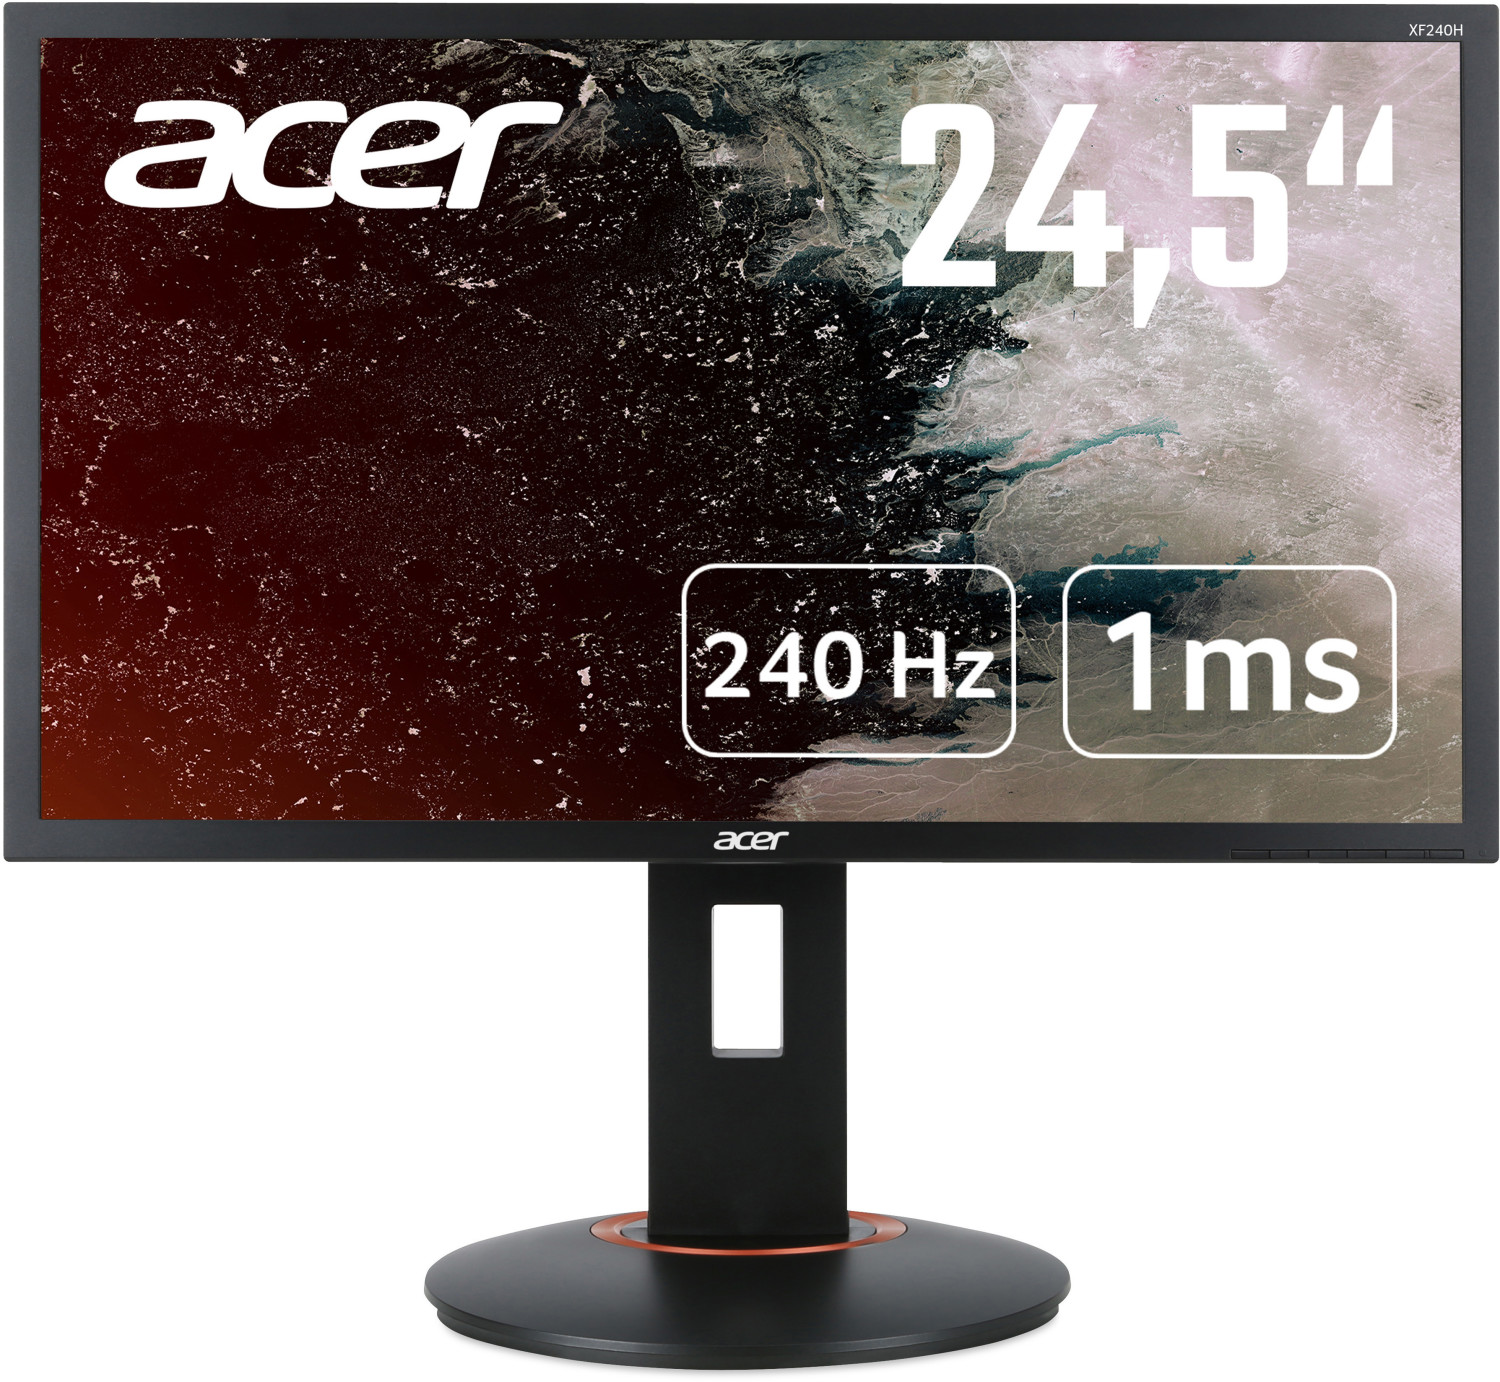 Acer XF250Q